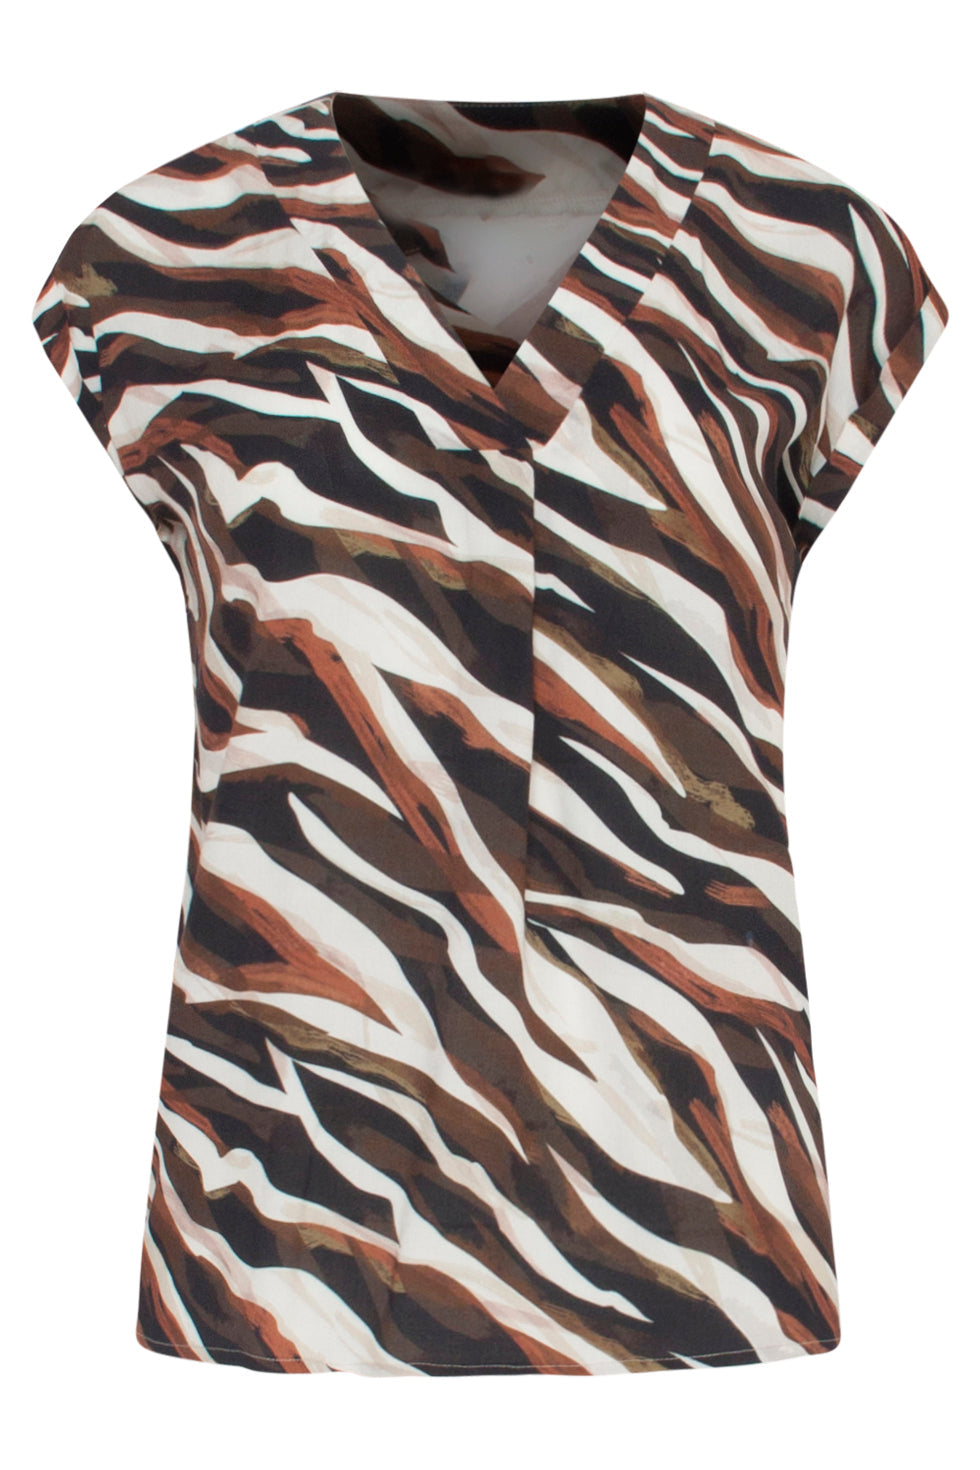 23123 Women Casual Short-Sleeve Stylish Zebra Print Top